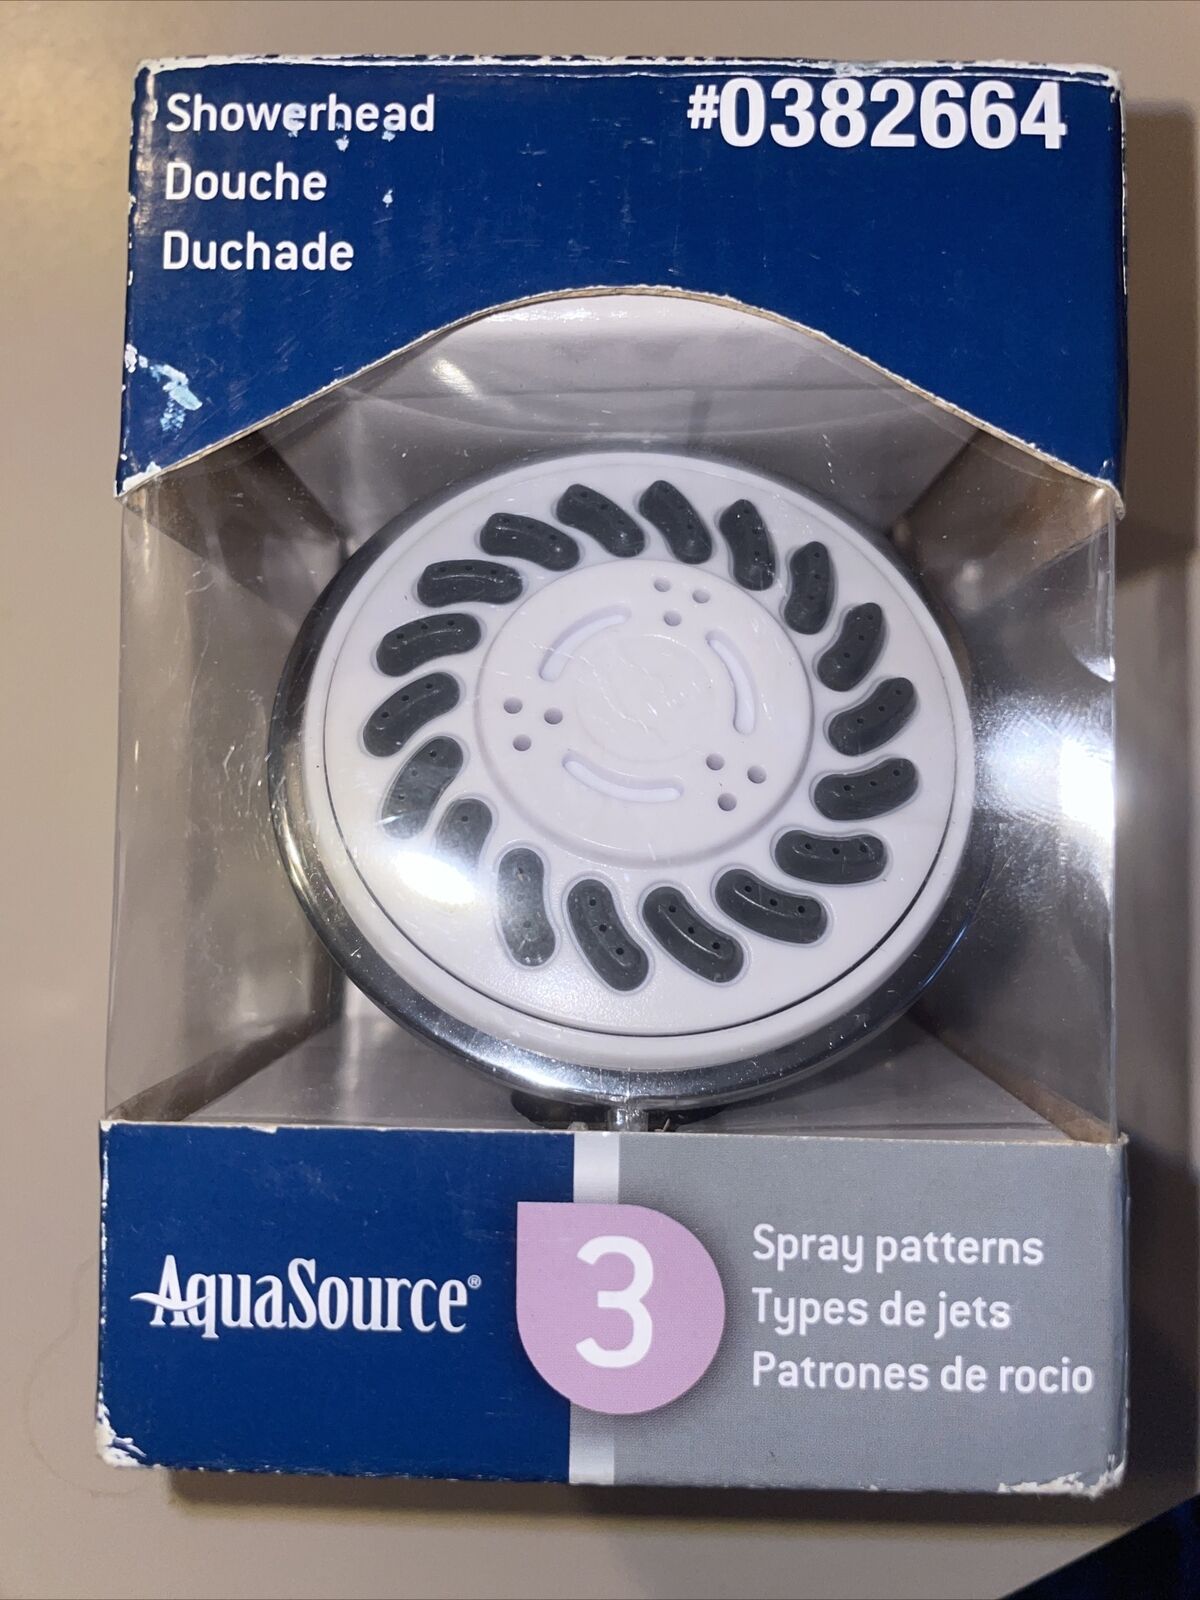 New Aquasource Showerhead With 3 Spray Patterns